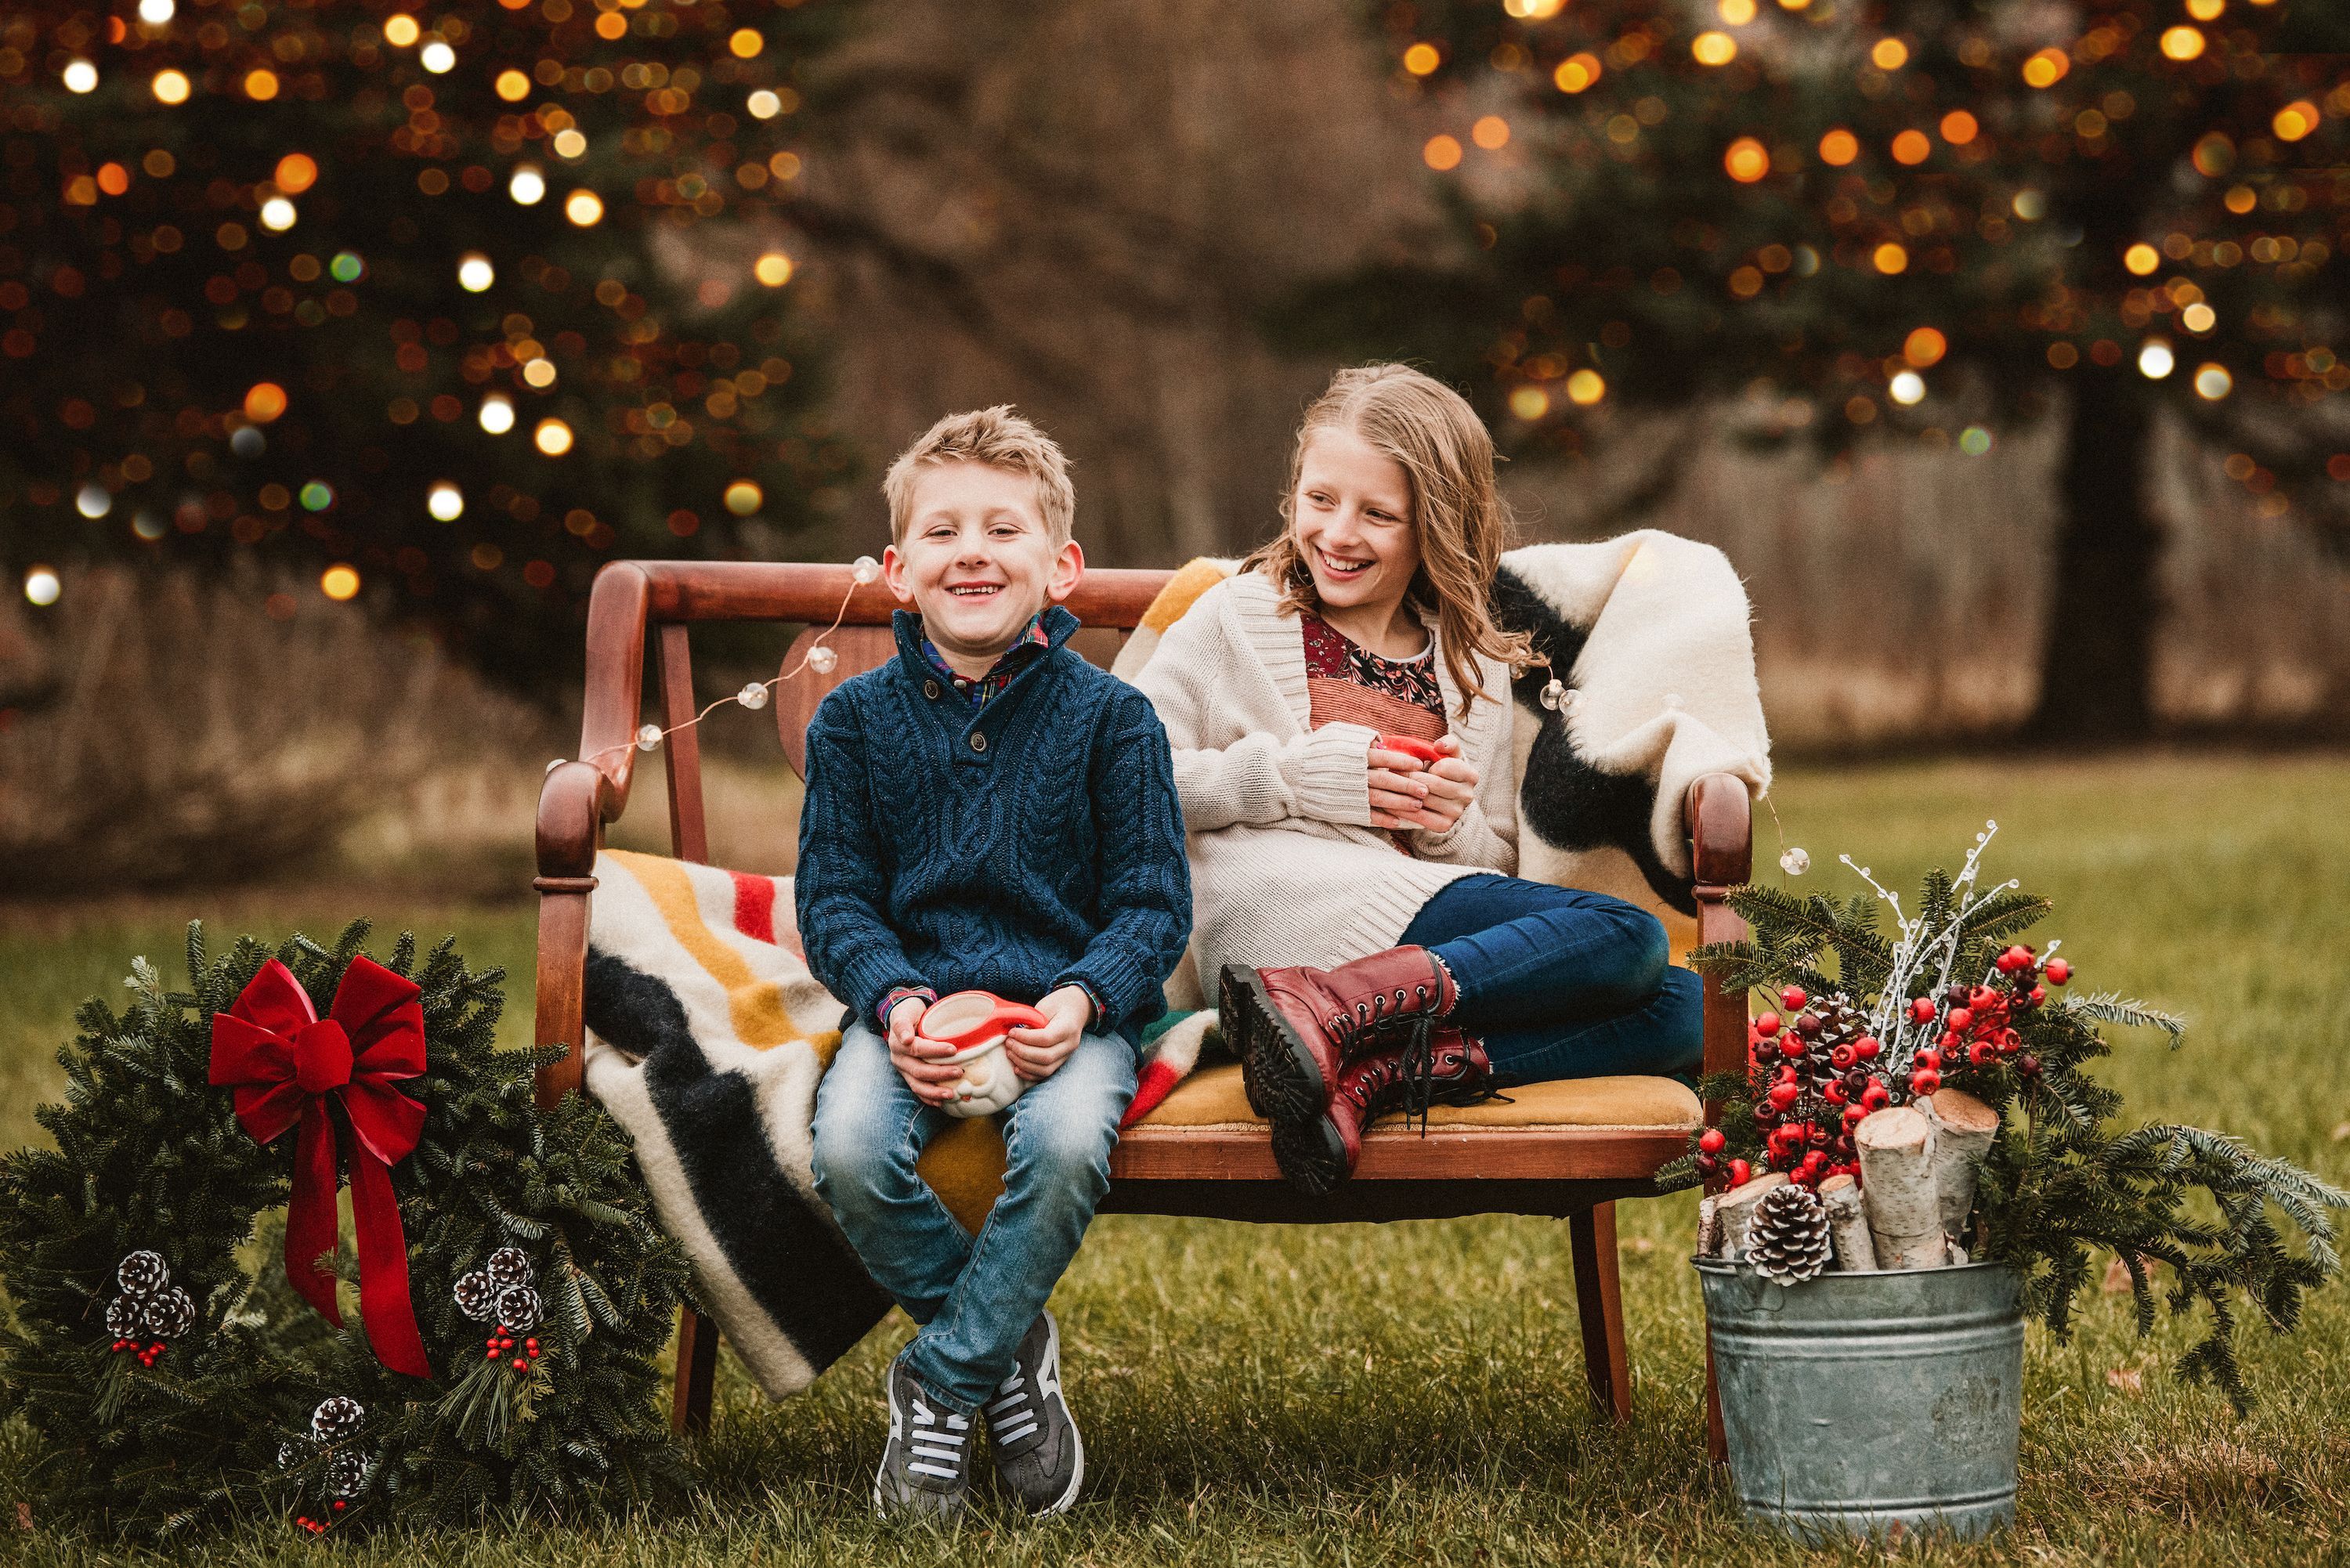 Family Photo Session- Holiday Themed -   21 christmas photoshoot family outdoor ideas